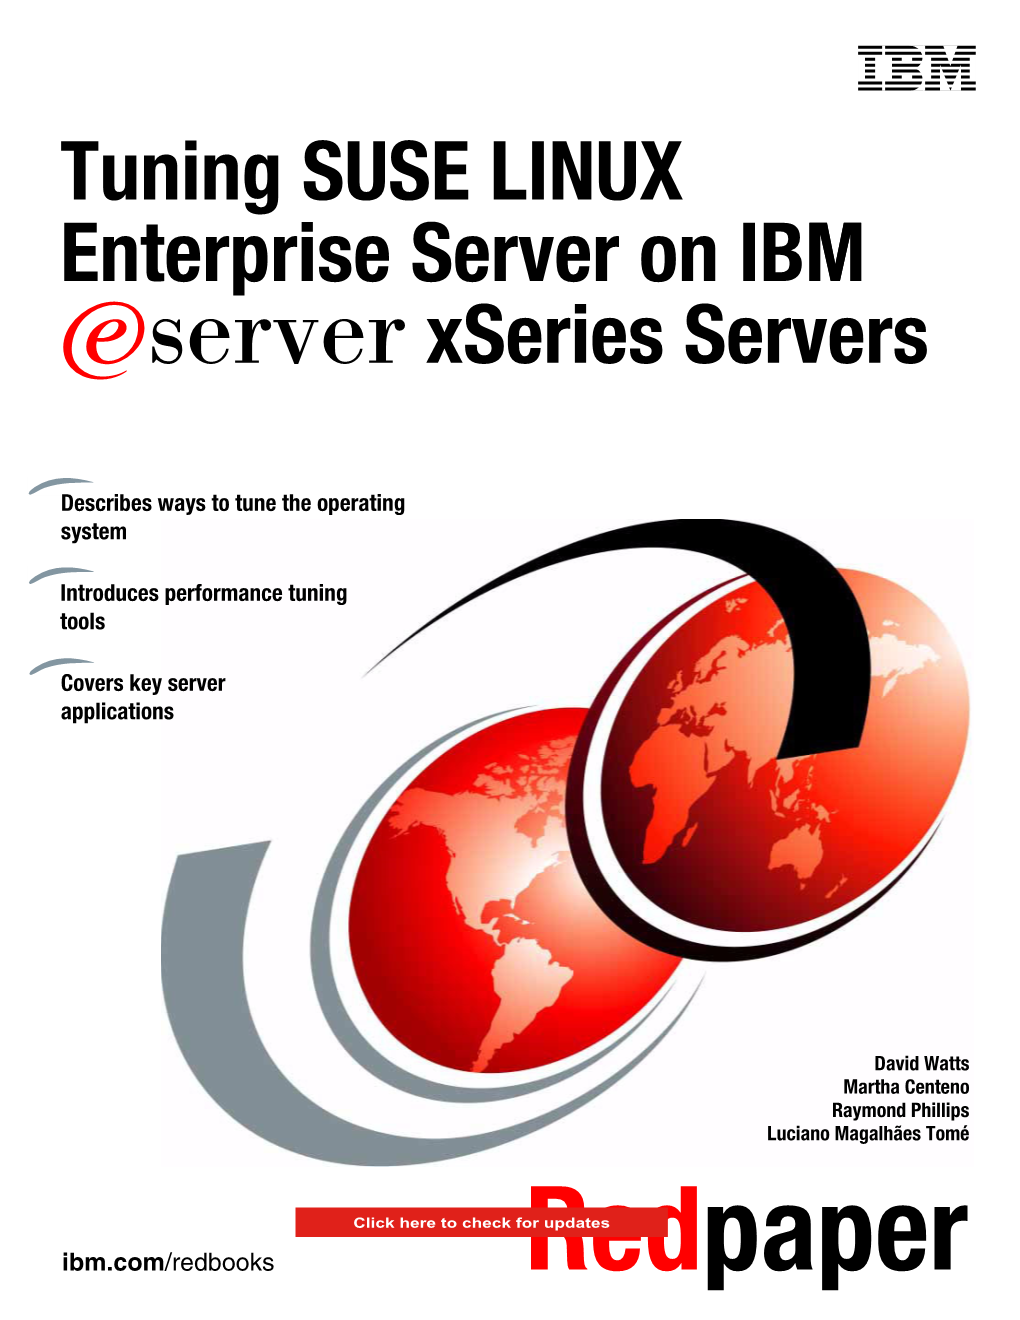 Tuning SUSE LINUX Enterprise Server on IBMM Eserver Xseries Servers